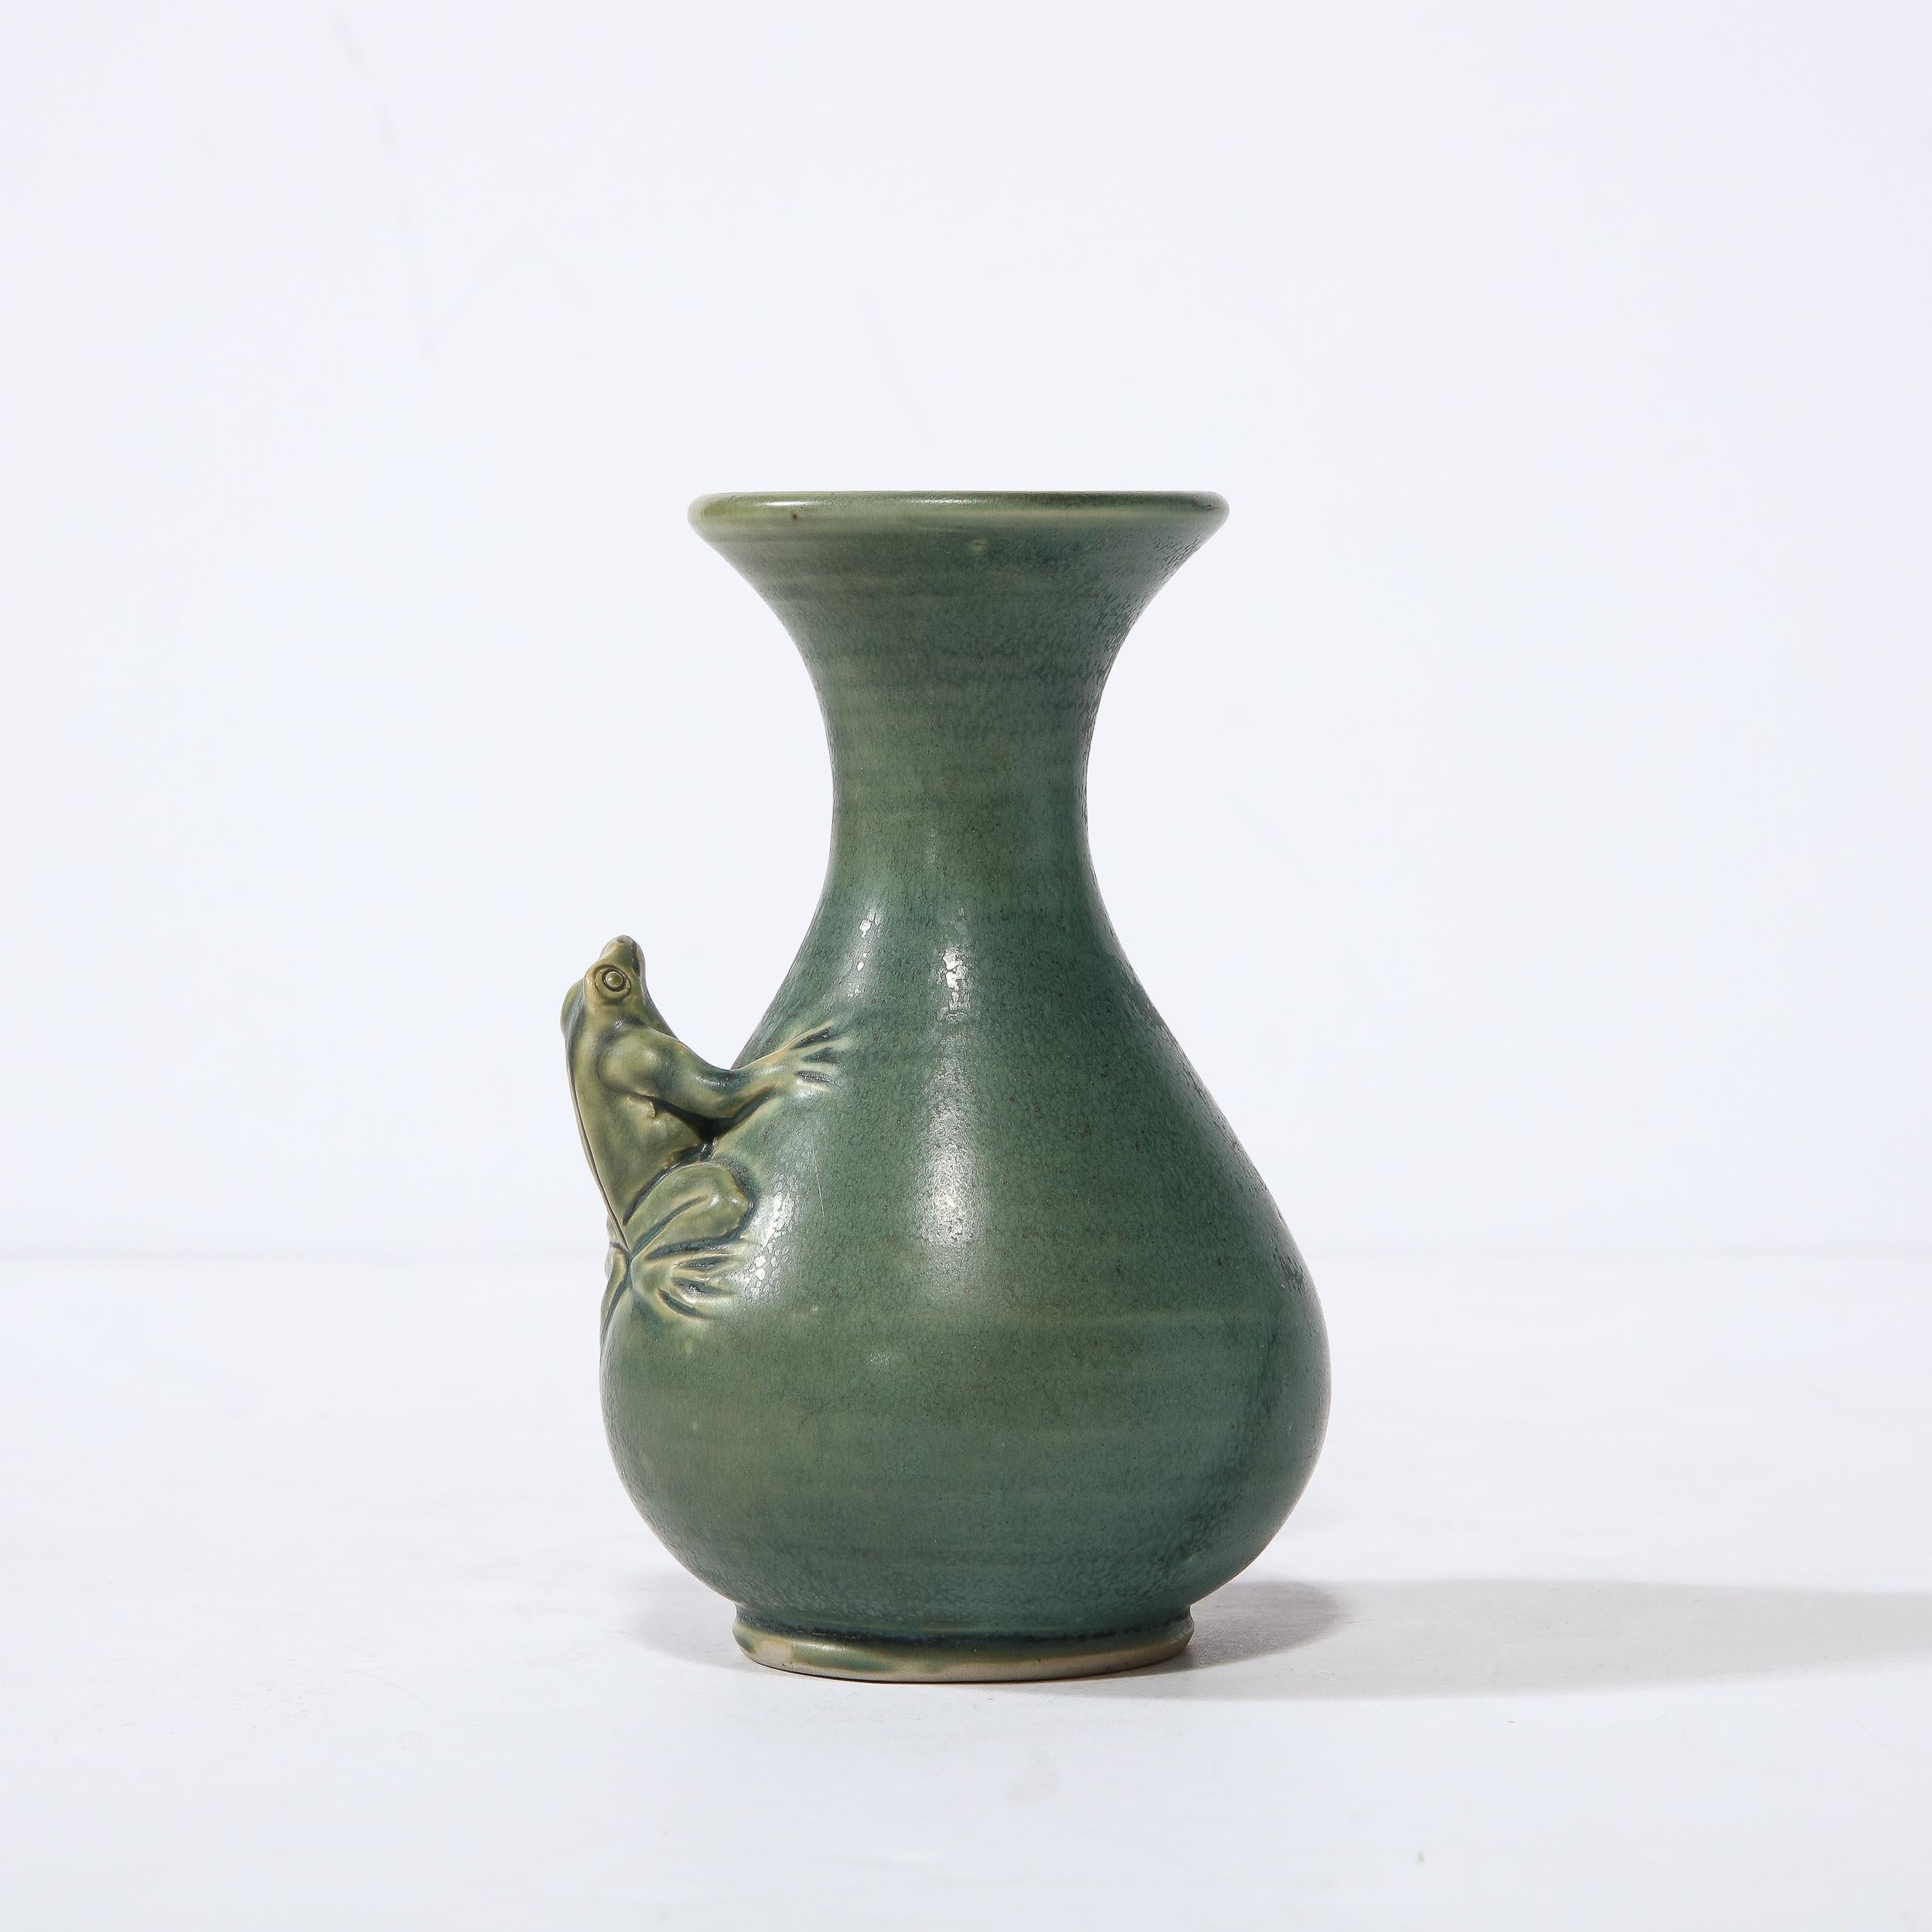 Modernist Sculptural Muted Jade Glazed Ceramic Vase with Frog Motif in Relief For Sale 3